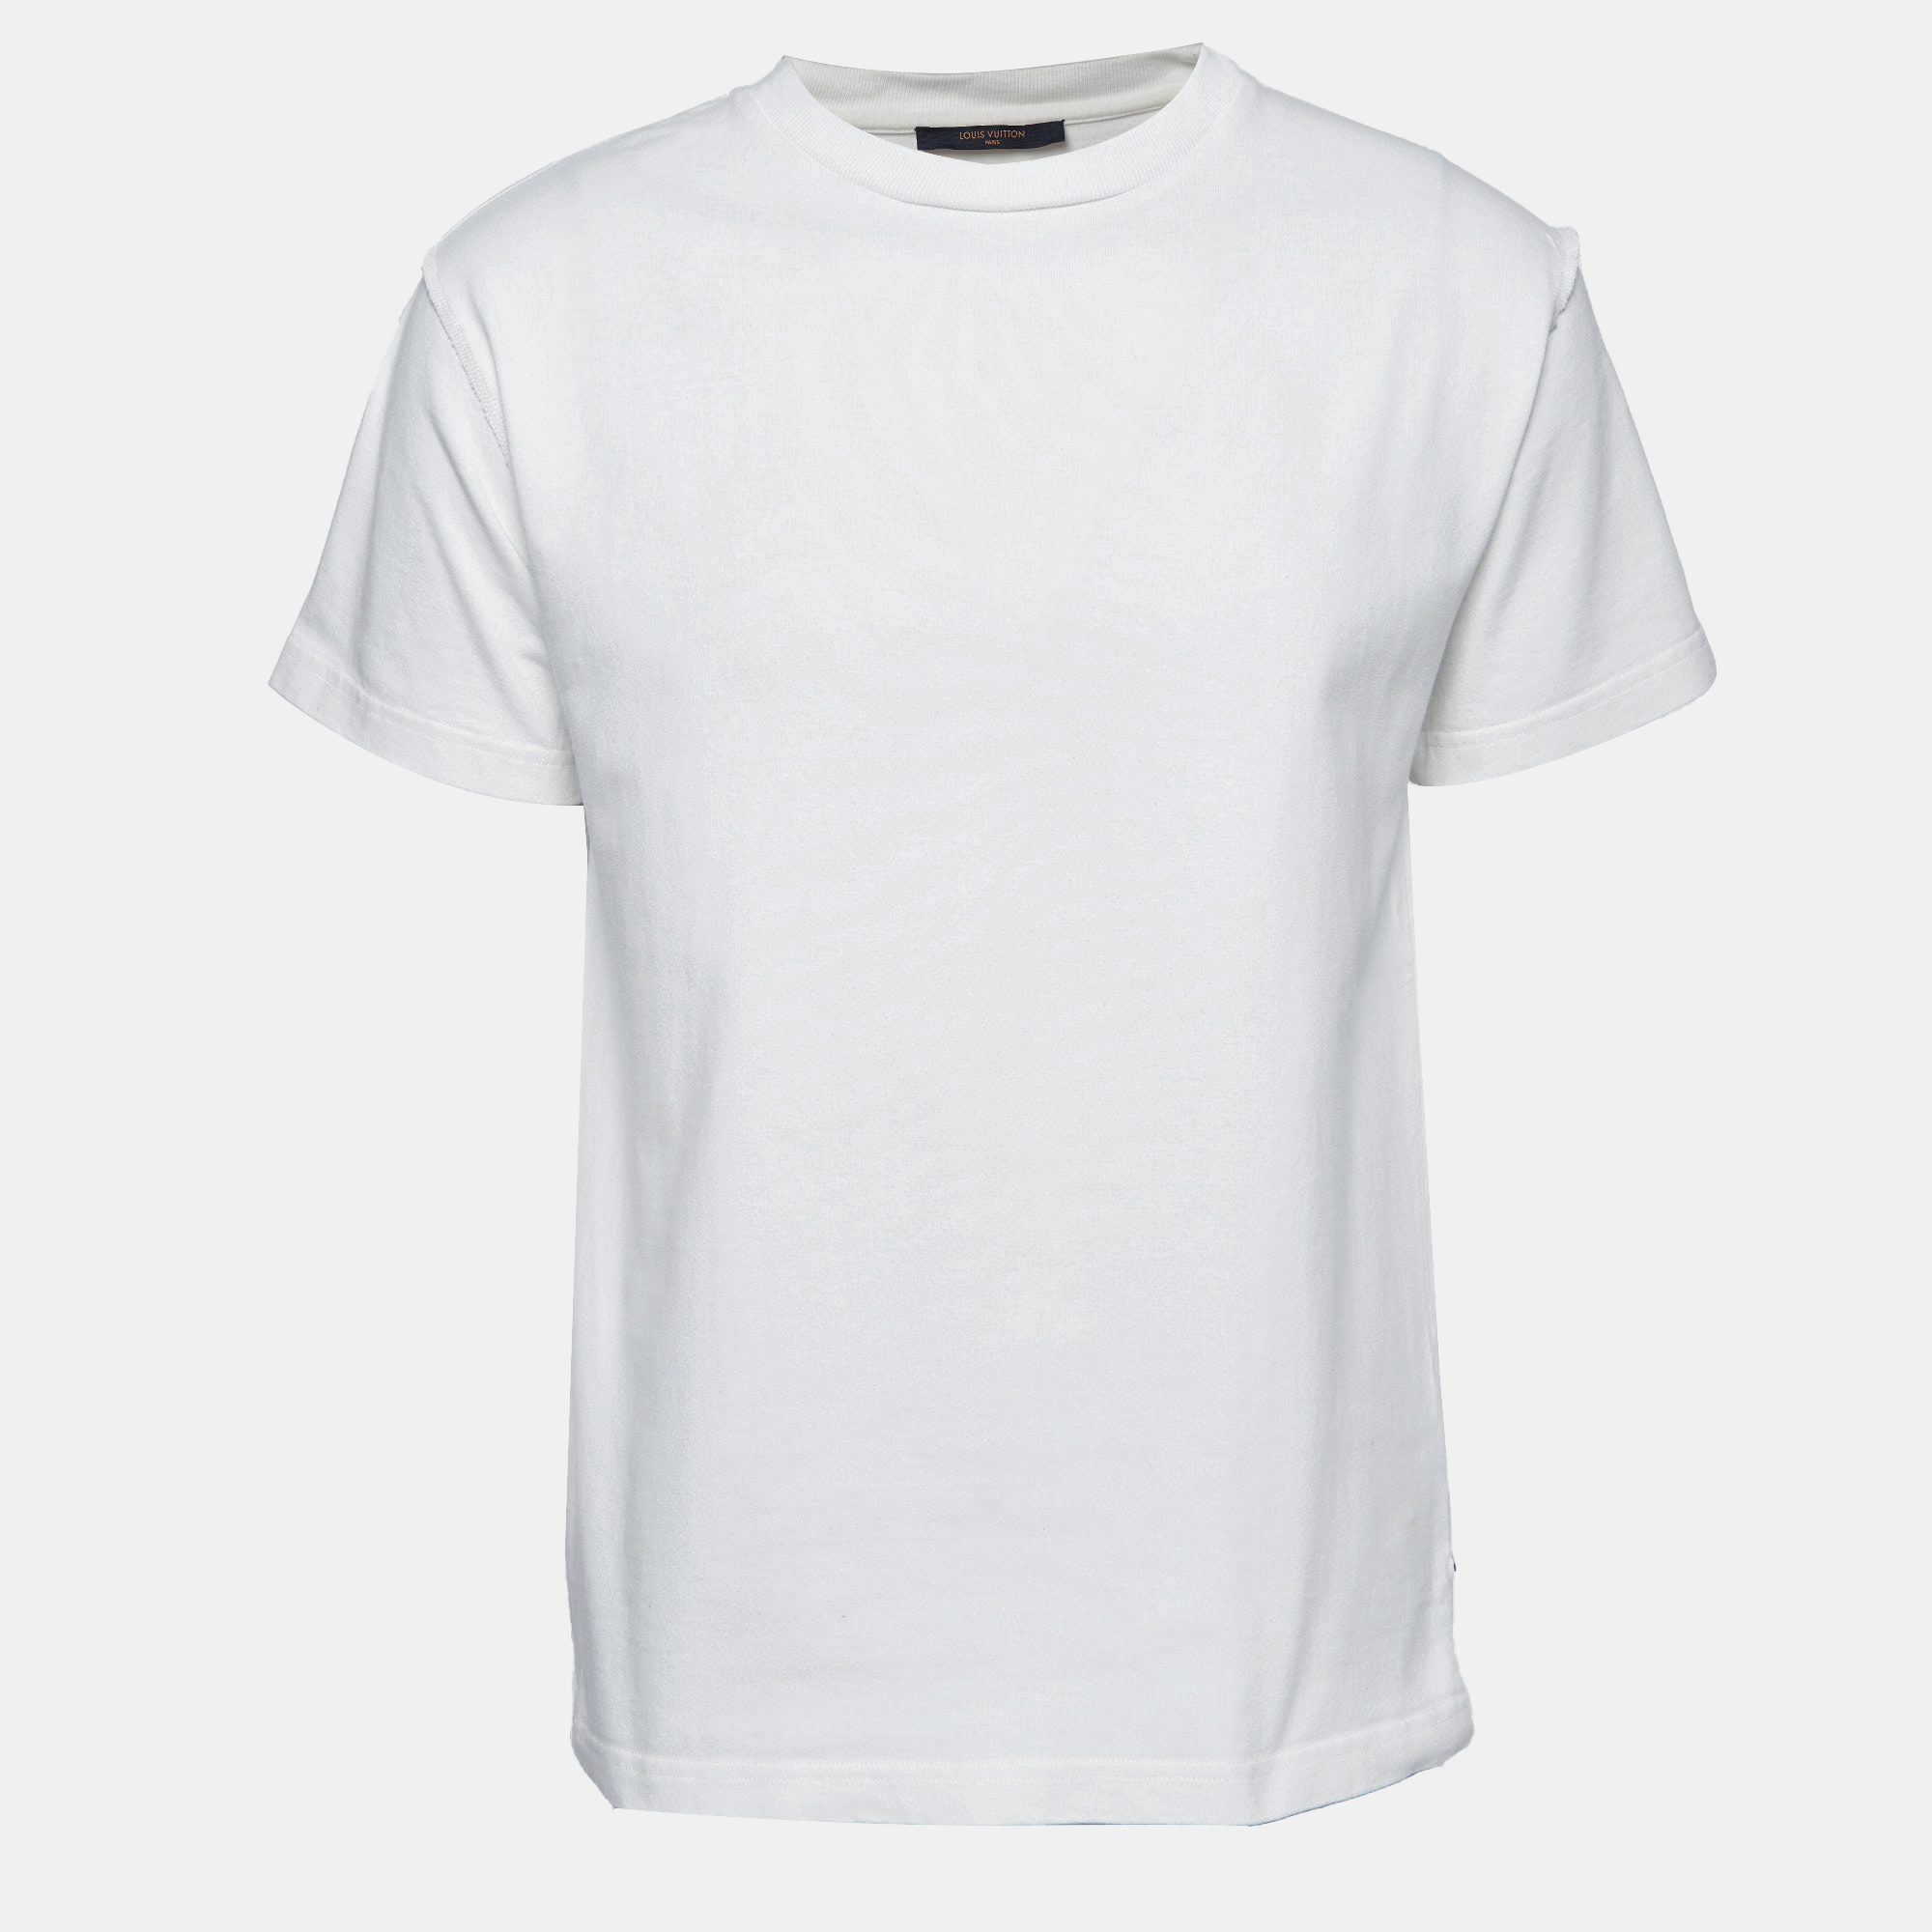 Louis vuitton white cotton crew neck t-shirt s